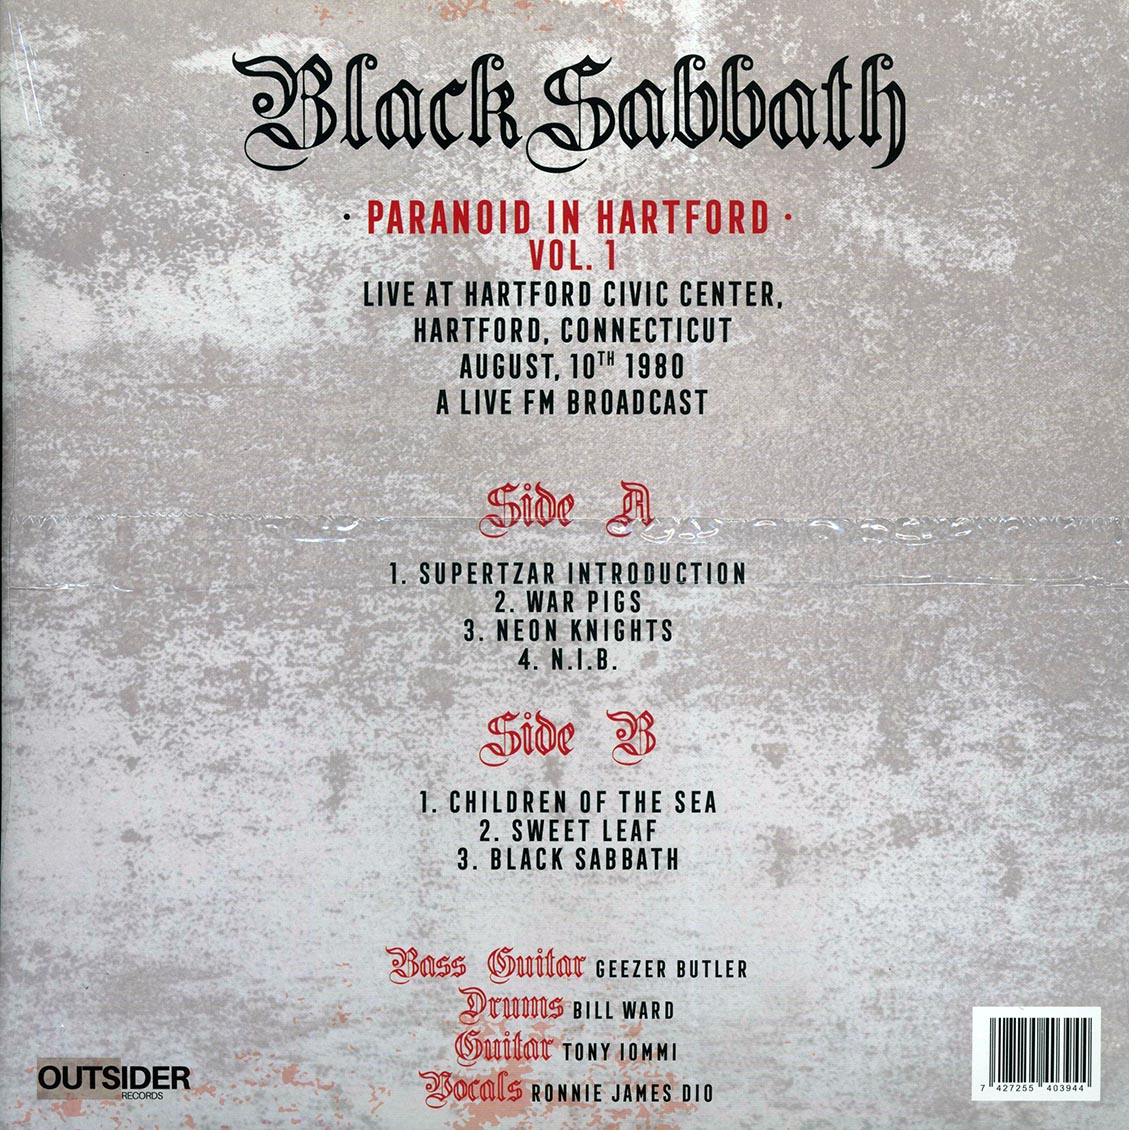 Black Sabbath - Paranoid In Hartford Volume 1: Live At Hartford Civic Center, Hartford Connecticut August 10th 1980 (red vinyl) - Vinyl LP, LP